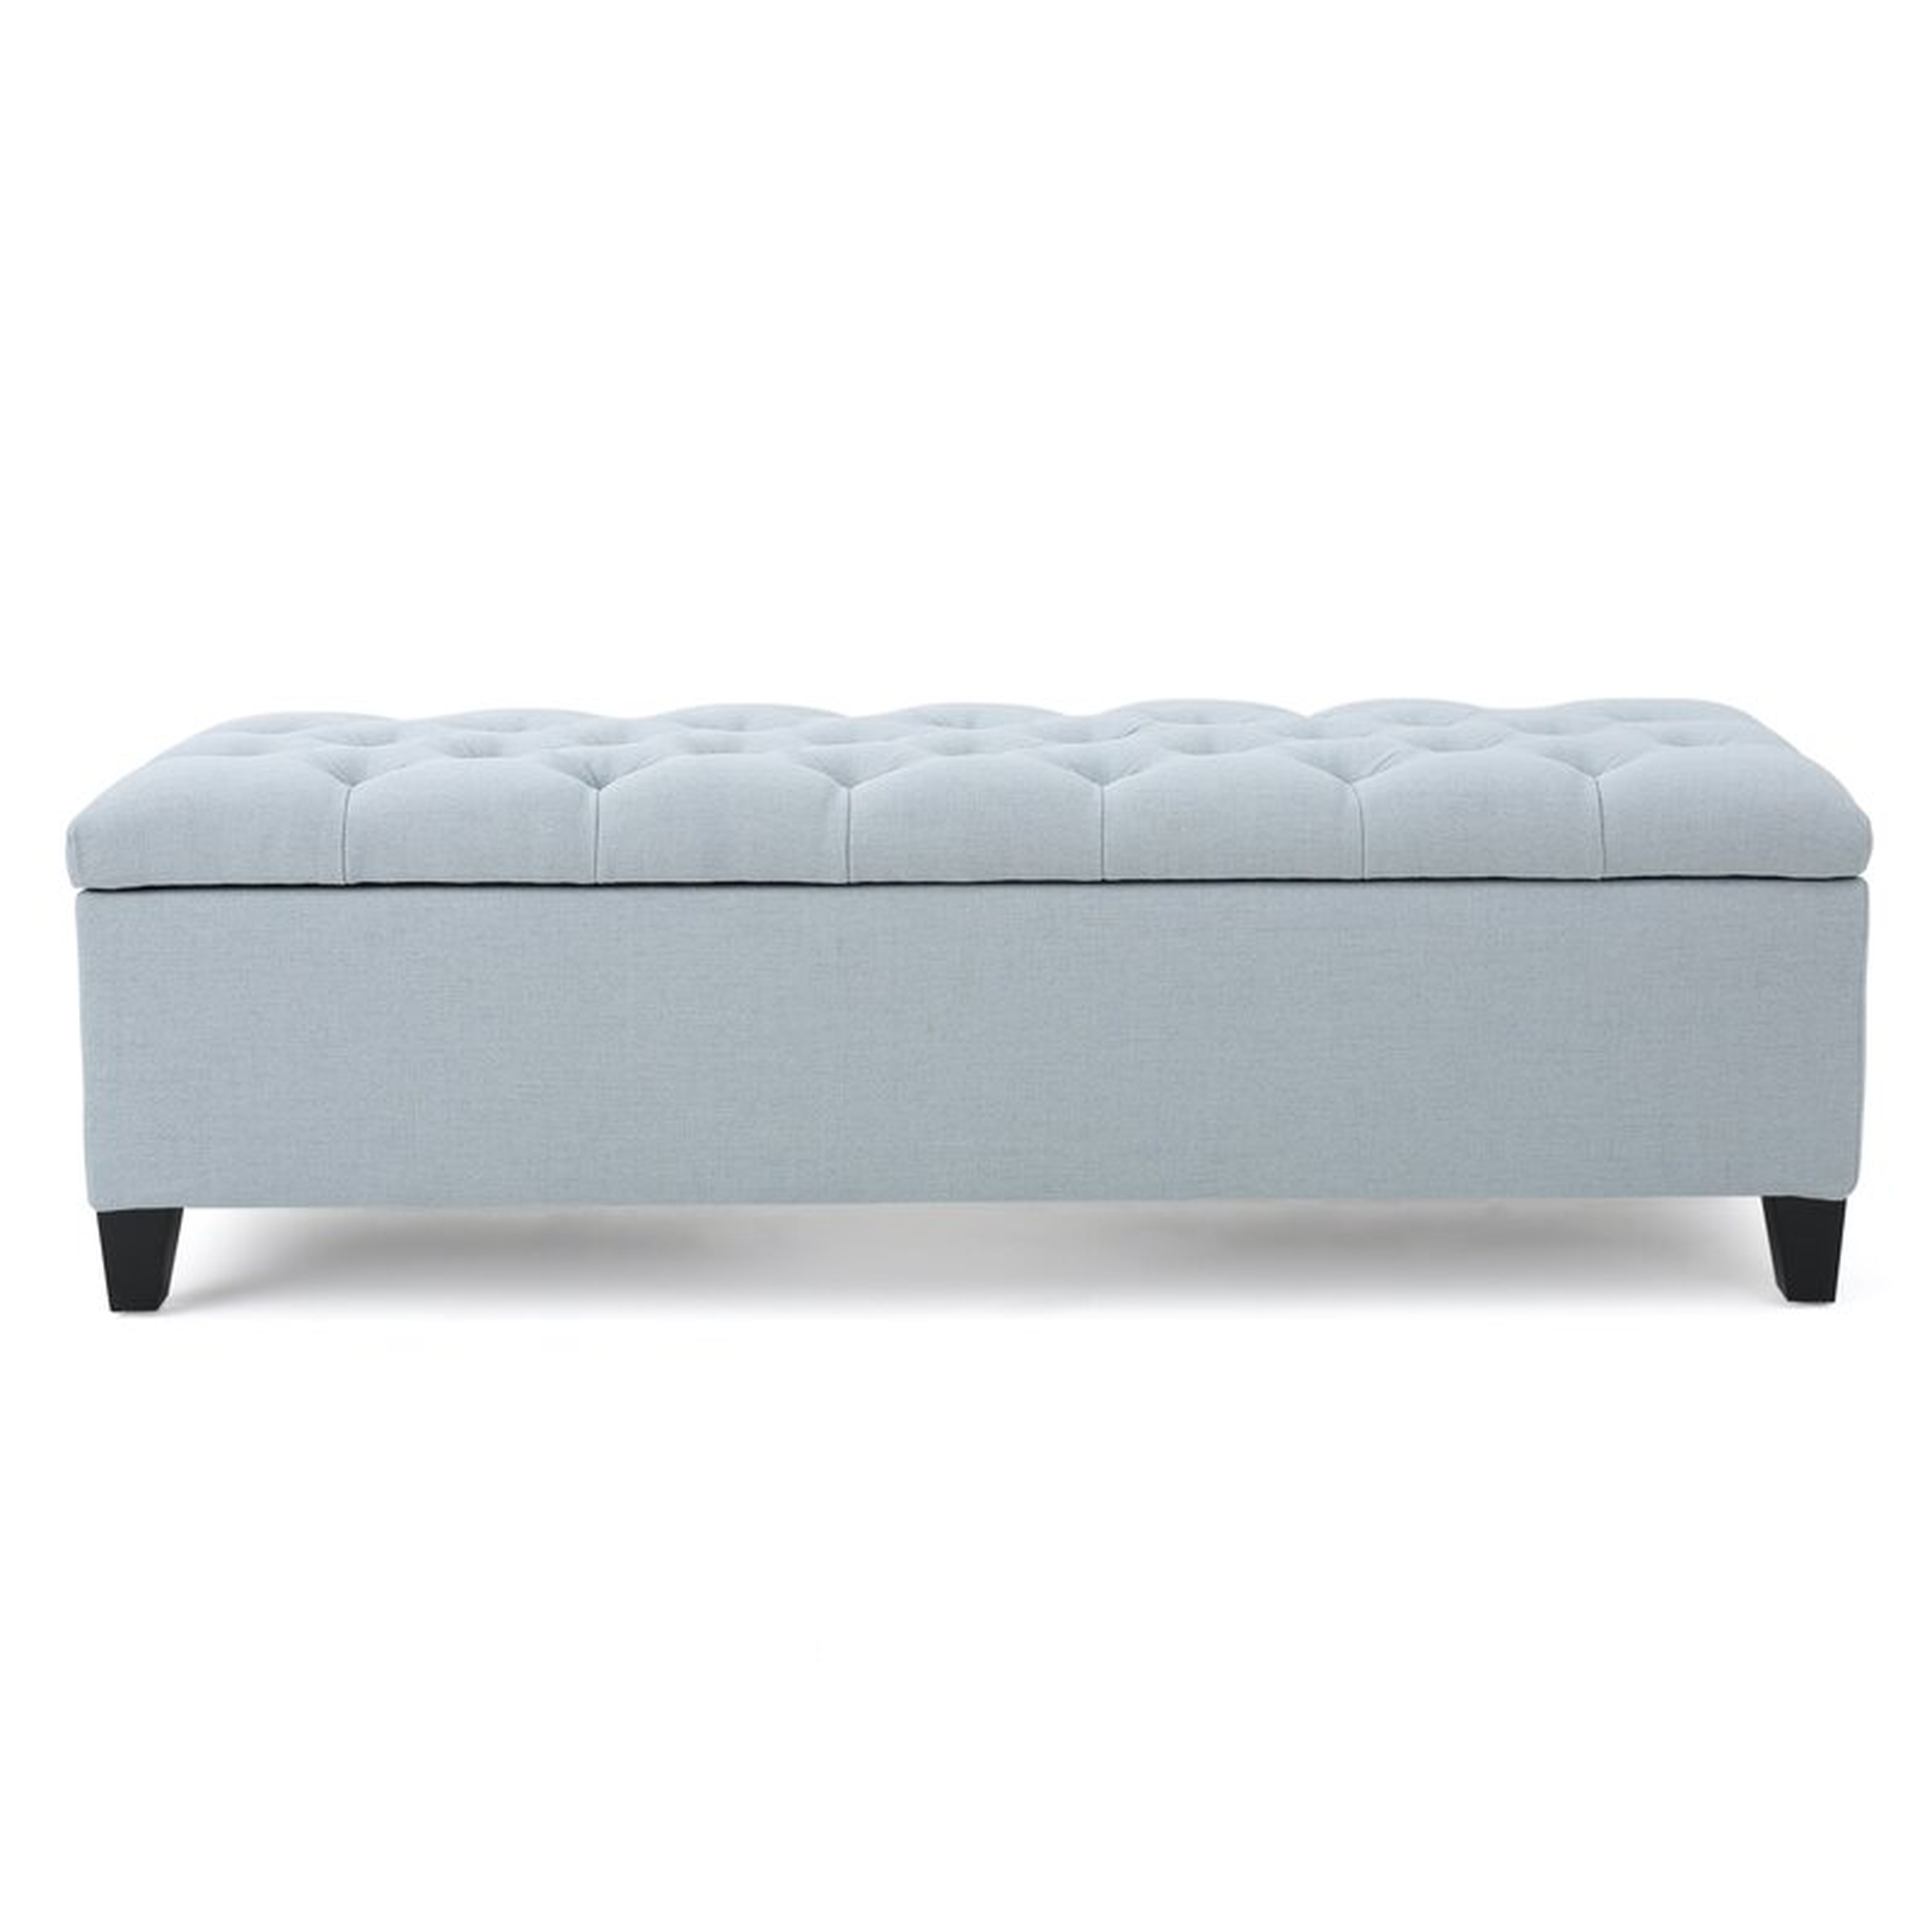 Amalfi Upholstered Flip Top Storage Bench - Wayfair